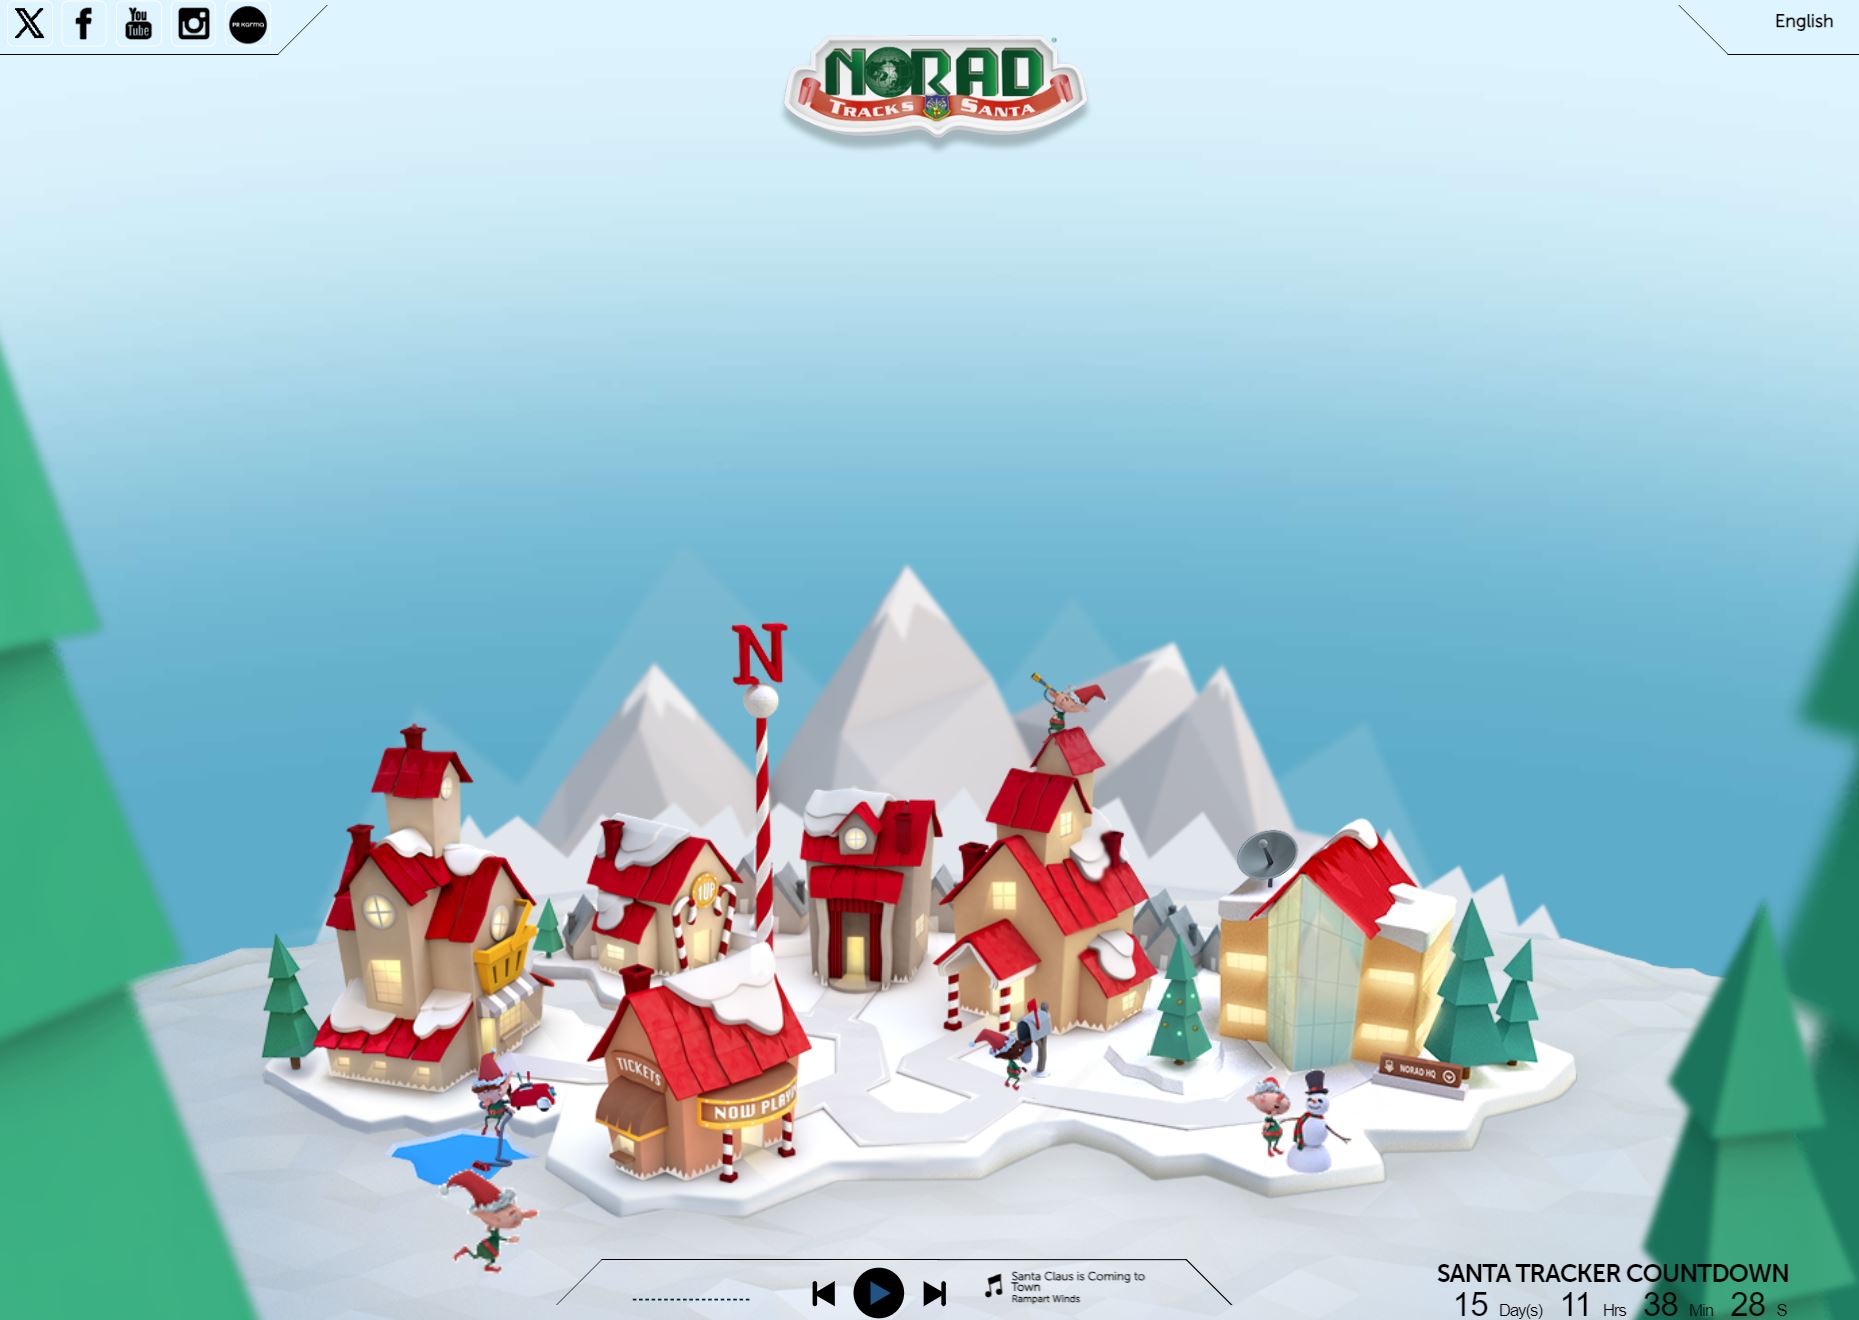 NORAD Santa Tracker with Microsoft Maps